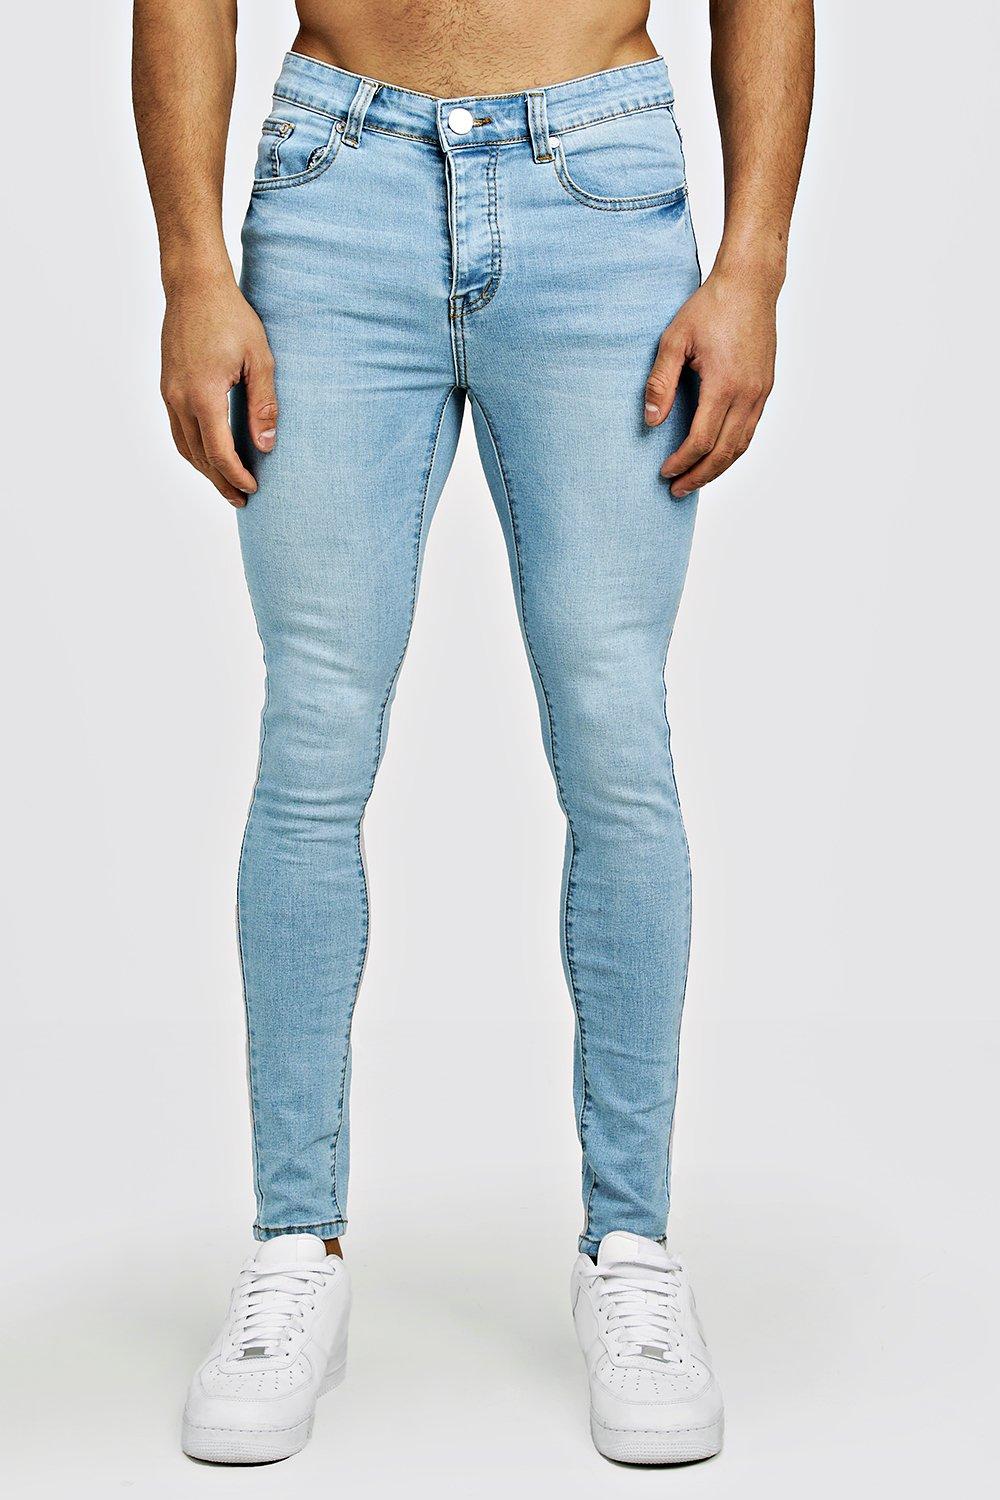 light blue jeans